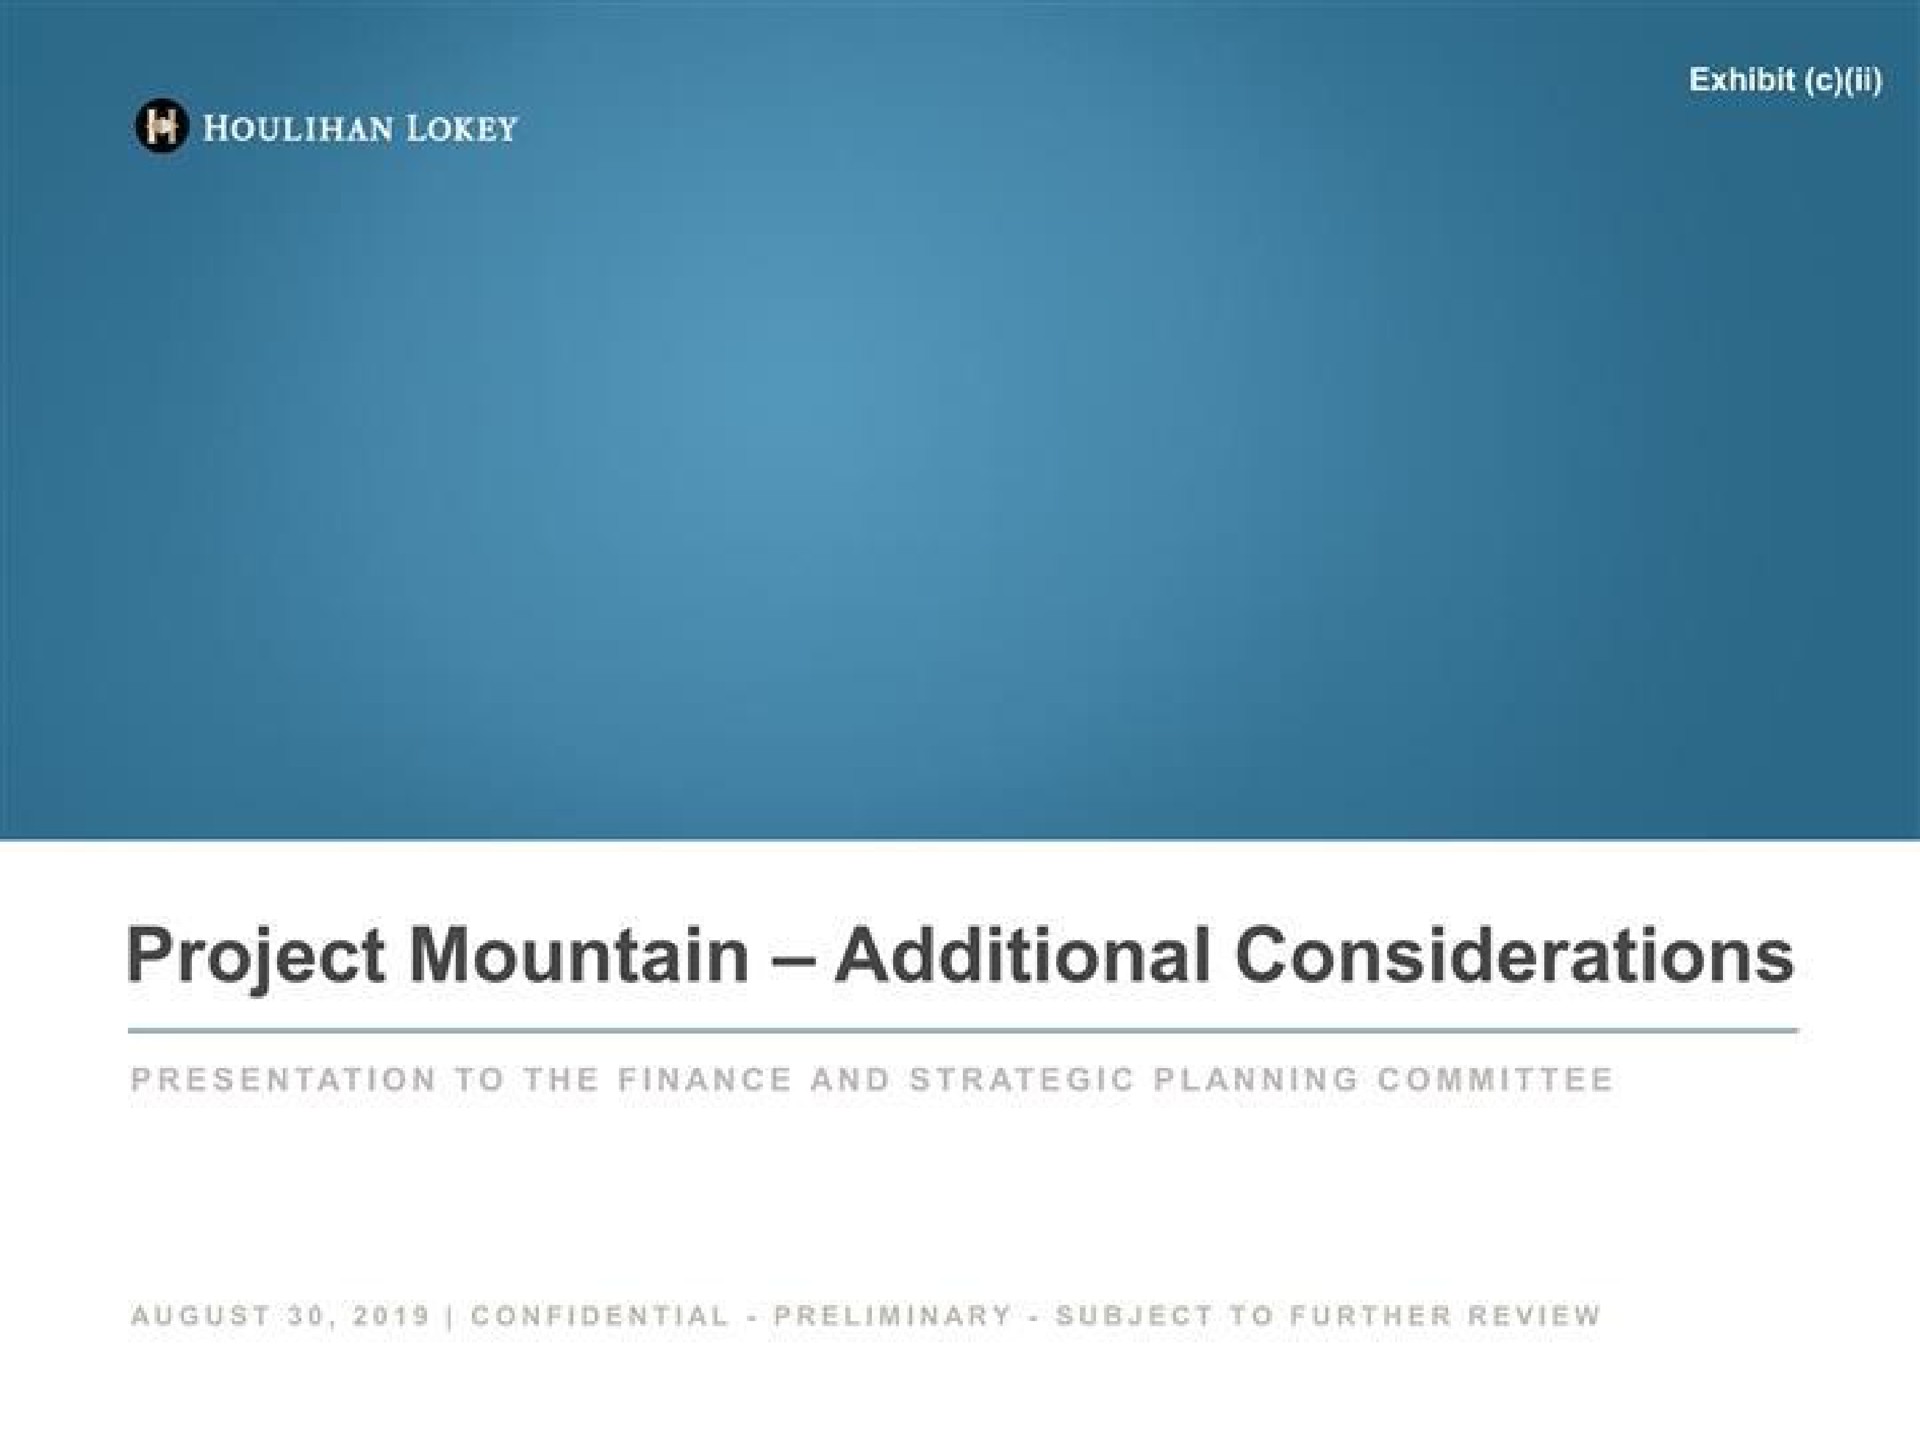 sain project mountain additional considerations | Houlihan Lokey